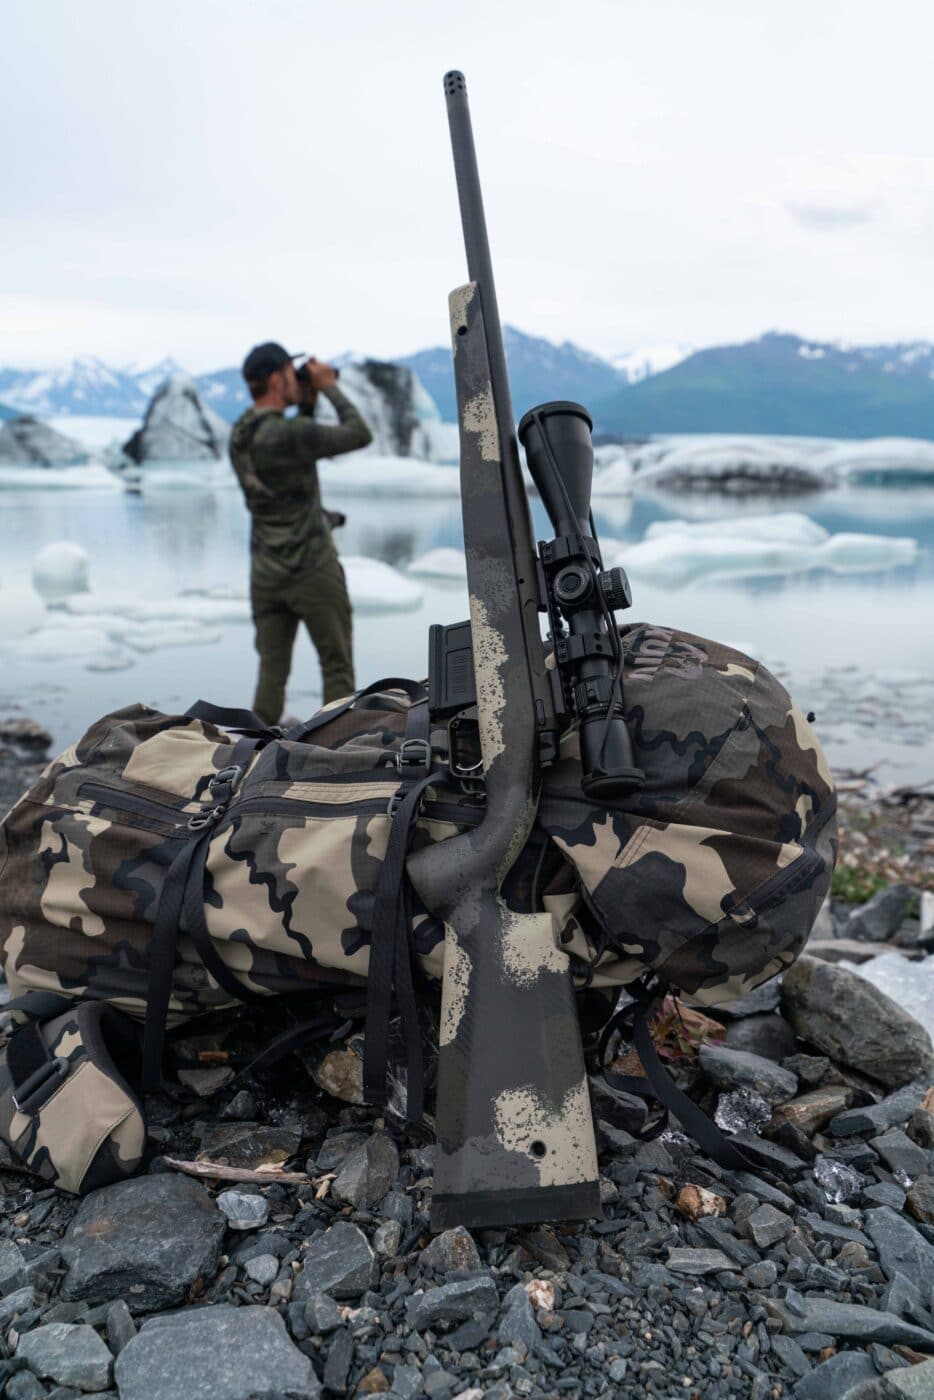 Man testing the Model 2020 Waypoint rifle in Alaska